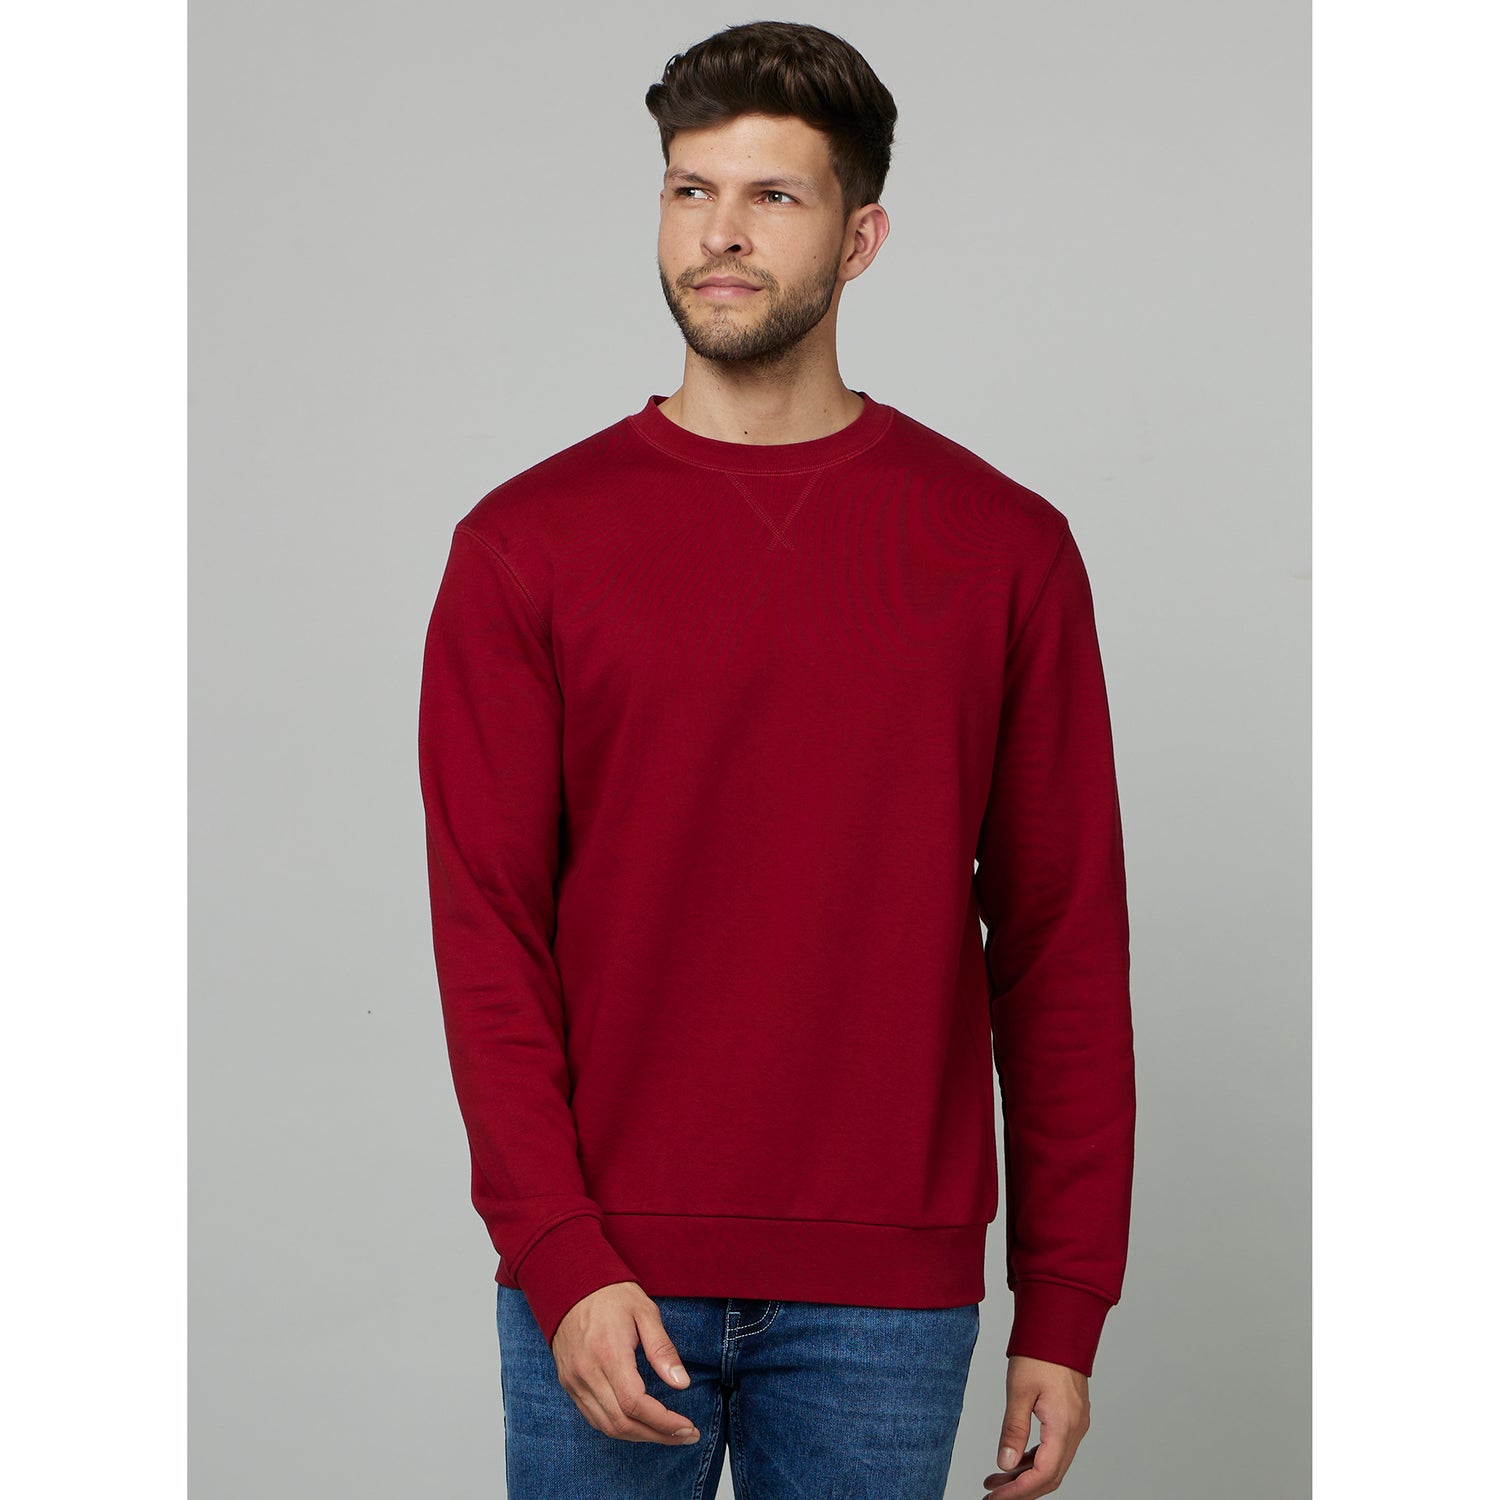 Burgundy Round Neck Full Sleeve Pullover Sweater (FESEVEN)